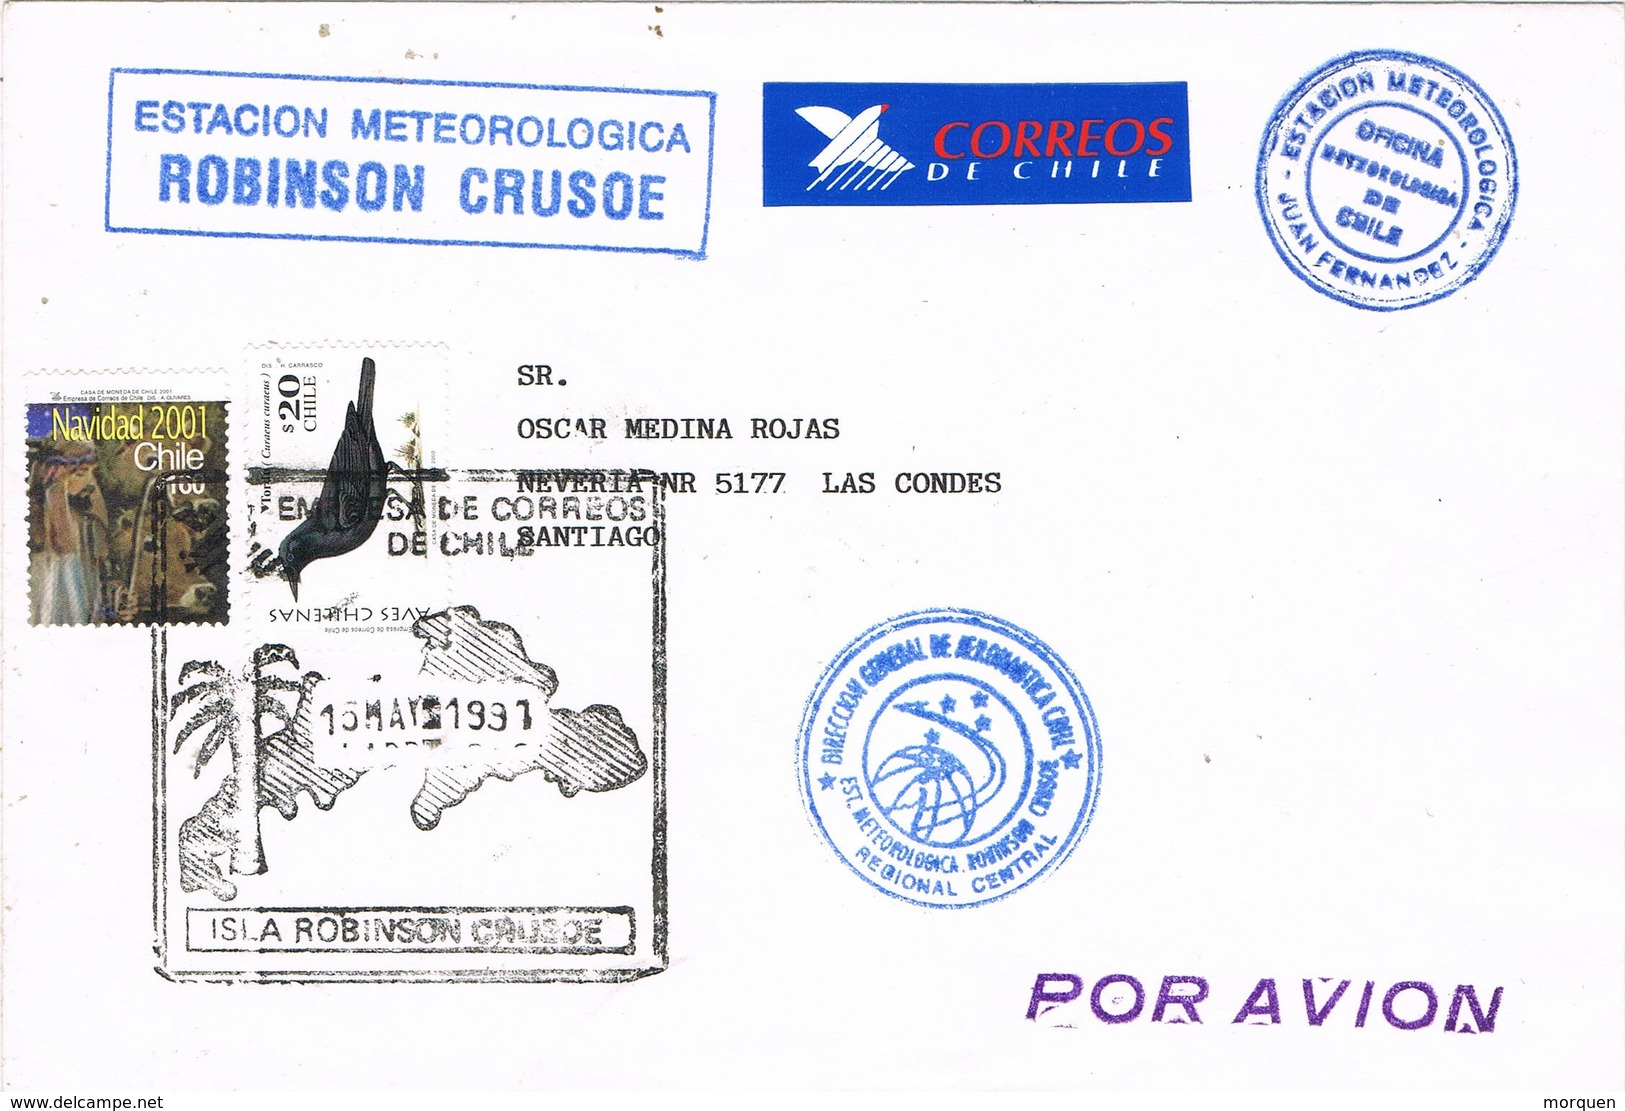 30958. Carta Aerea JUAN FERNANDEZ (Chile) 1991. Isla Robinson CRUSOE, Estacion Meteorologica - Chili